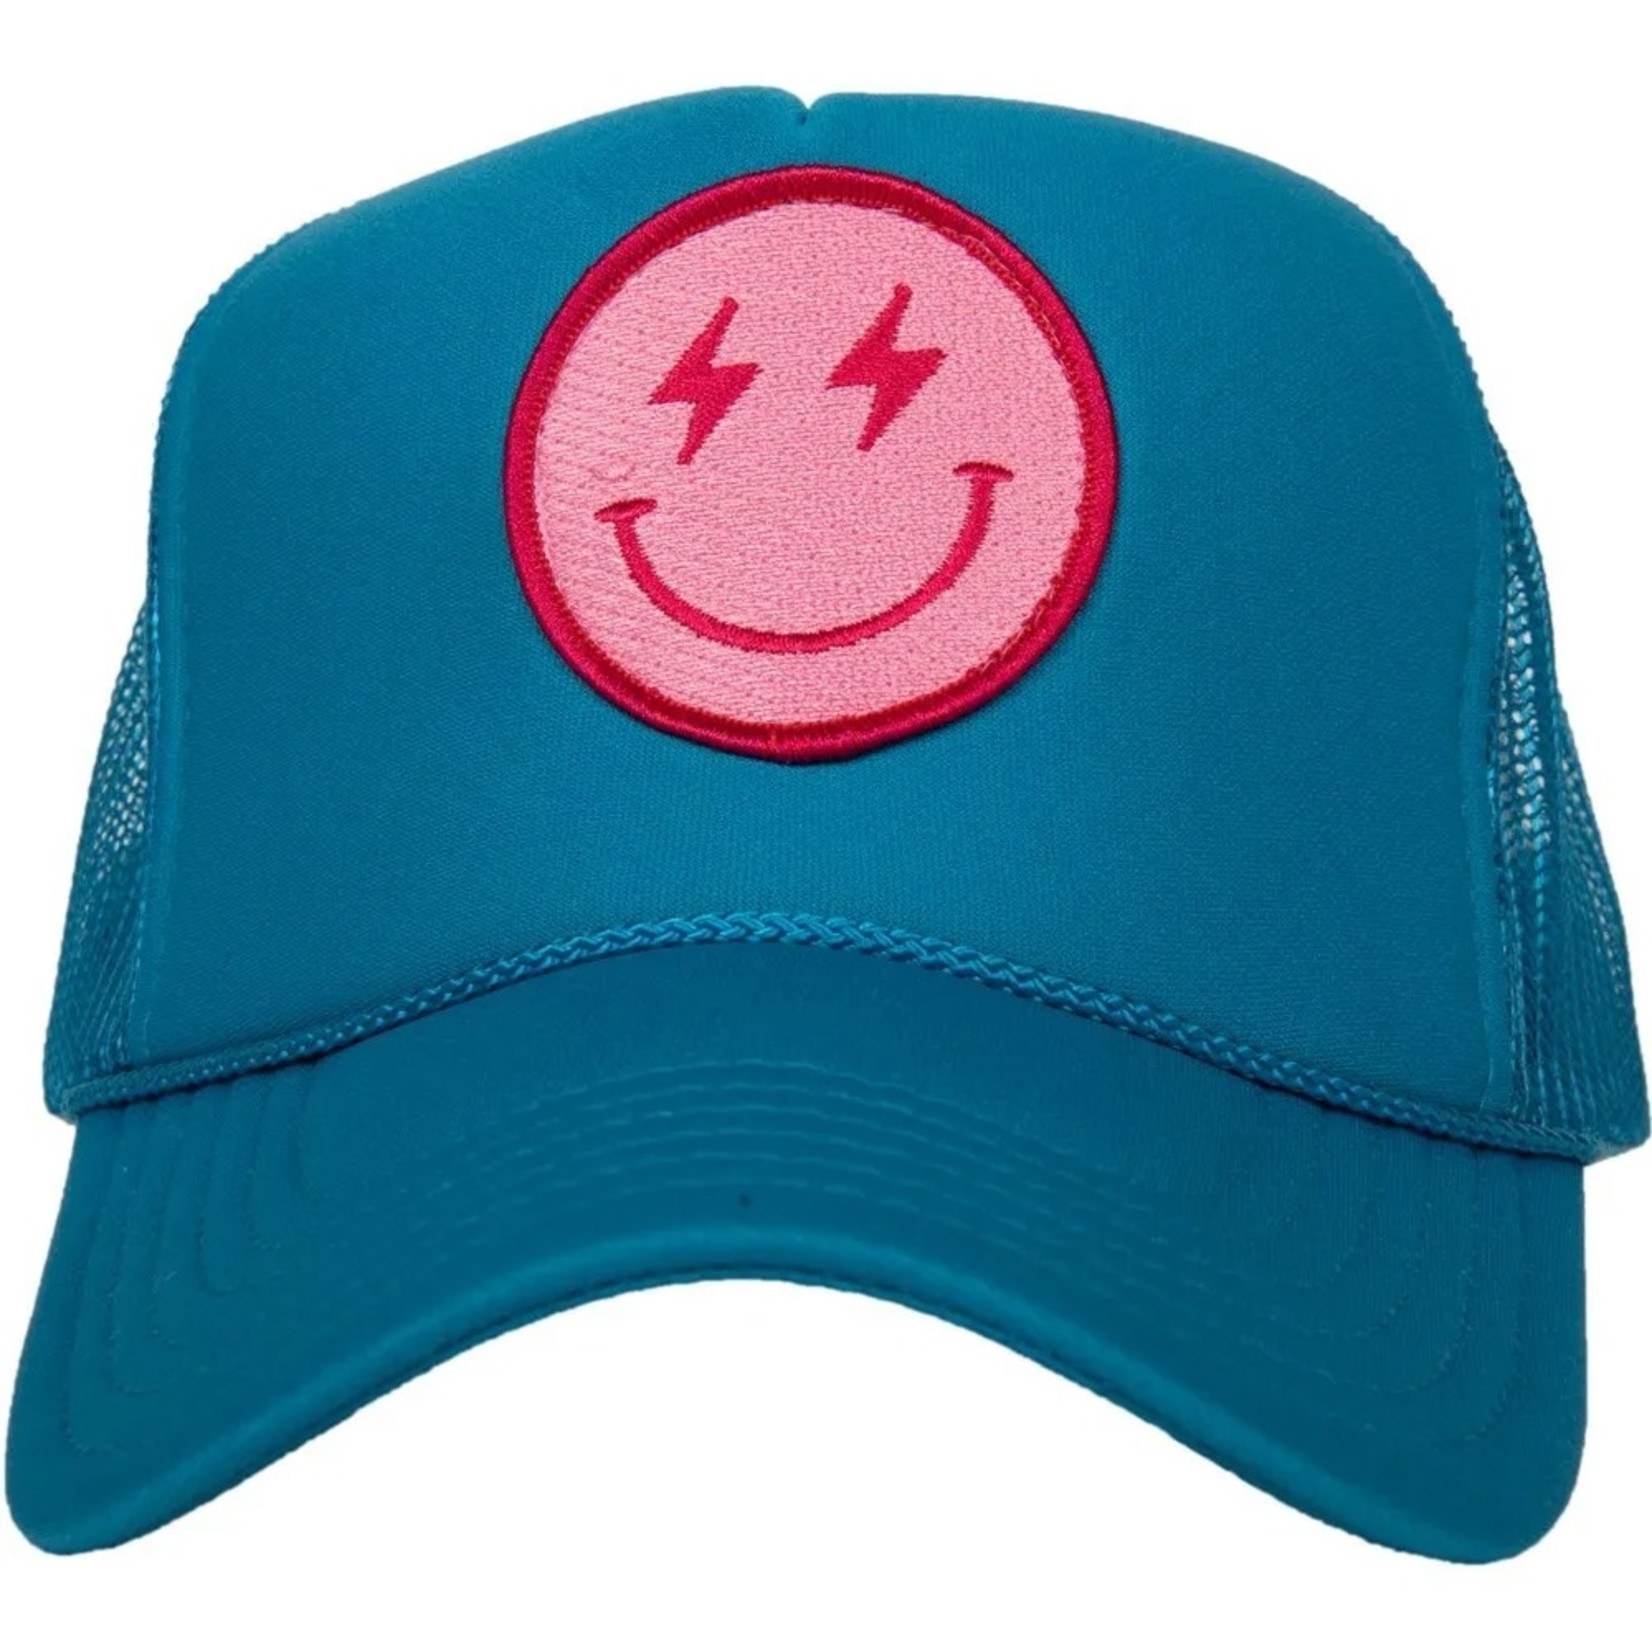 Katydid Smiley Face Trucker Hat